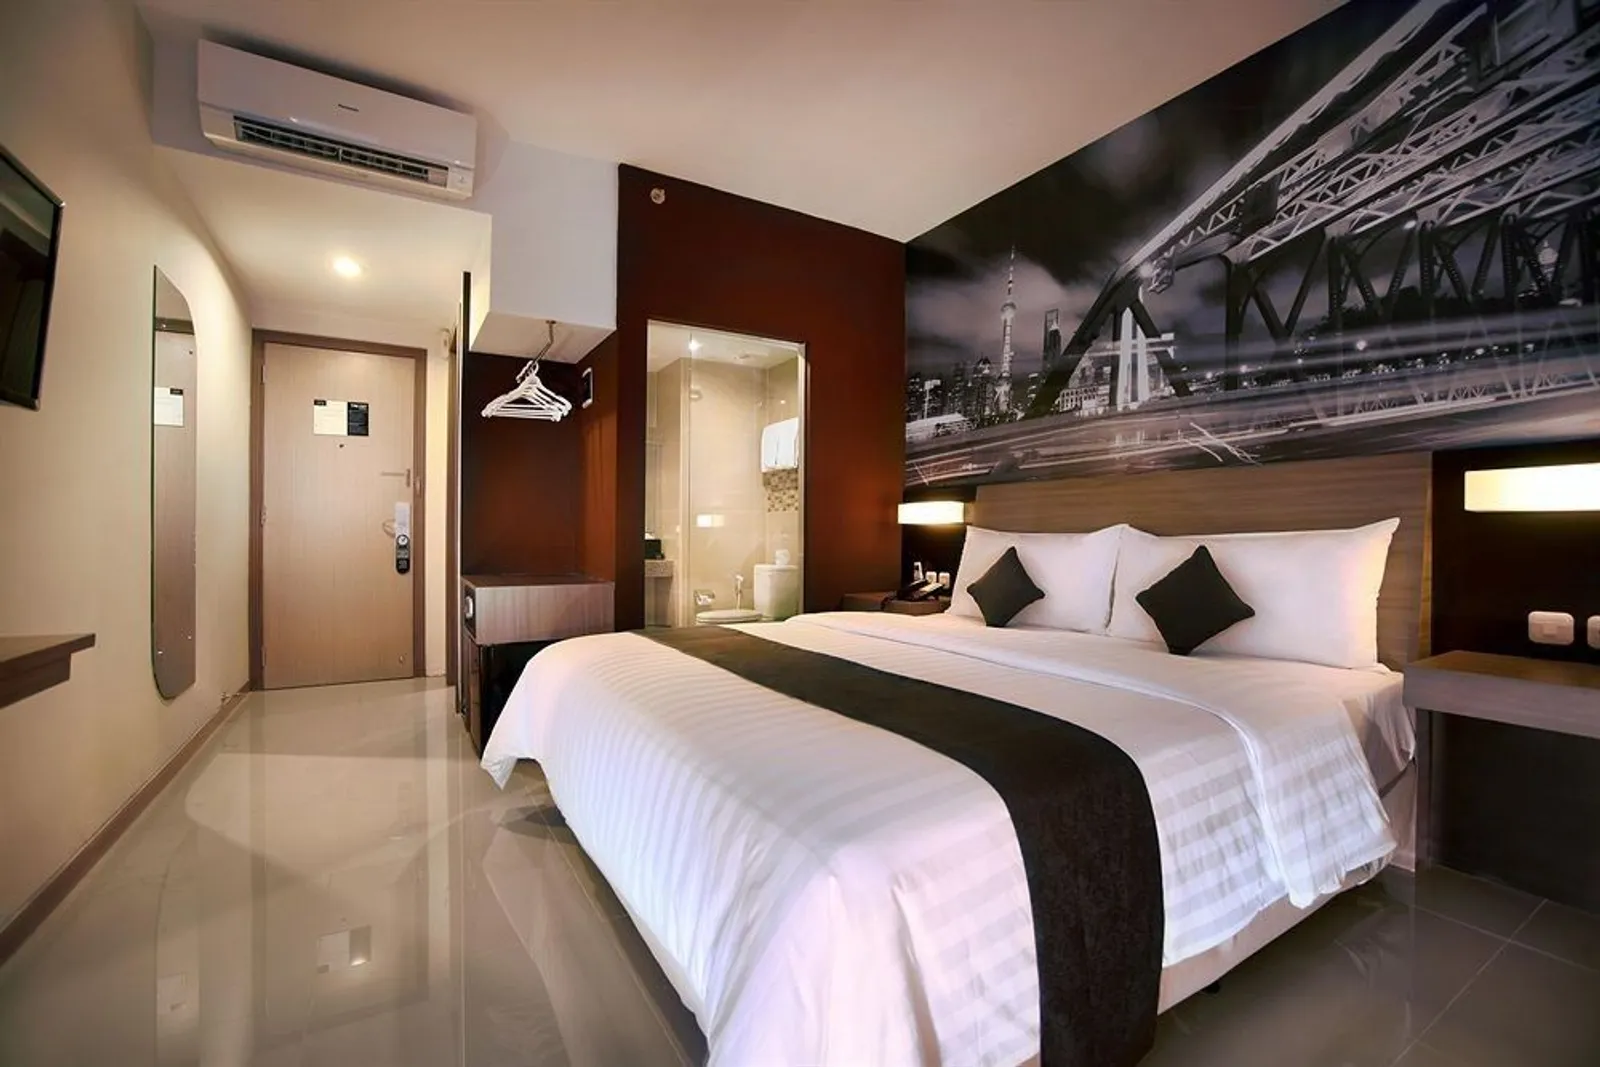 10 Rekomendasi Hotel Murah di Semarang, Pesan Sekarang Sebelum Lebaran